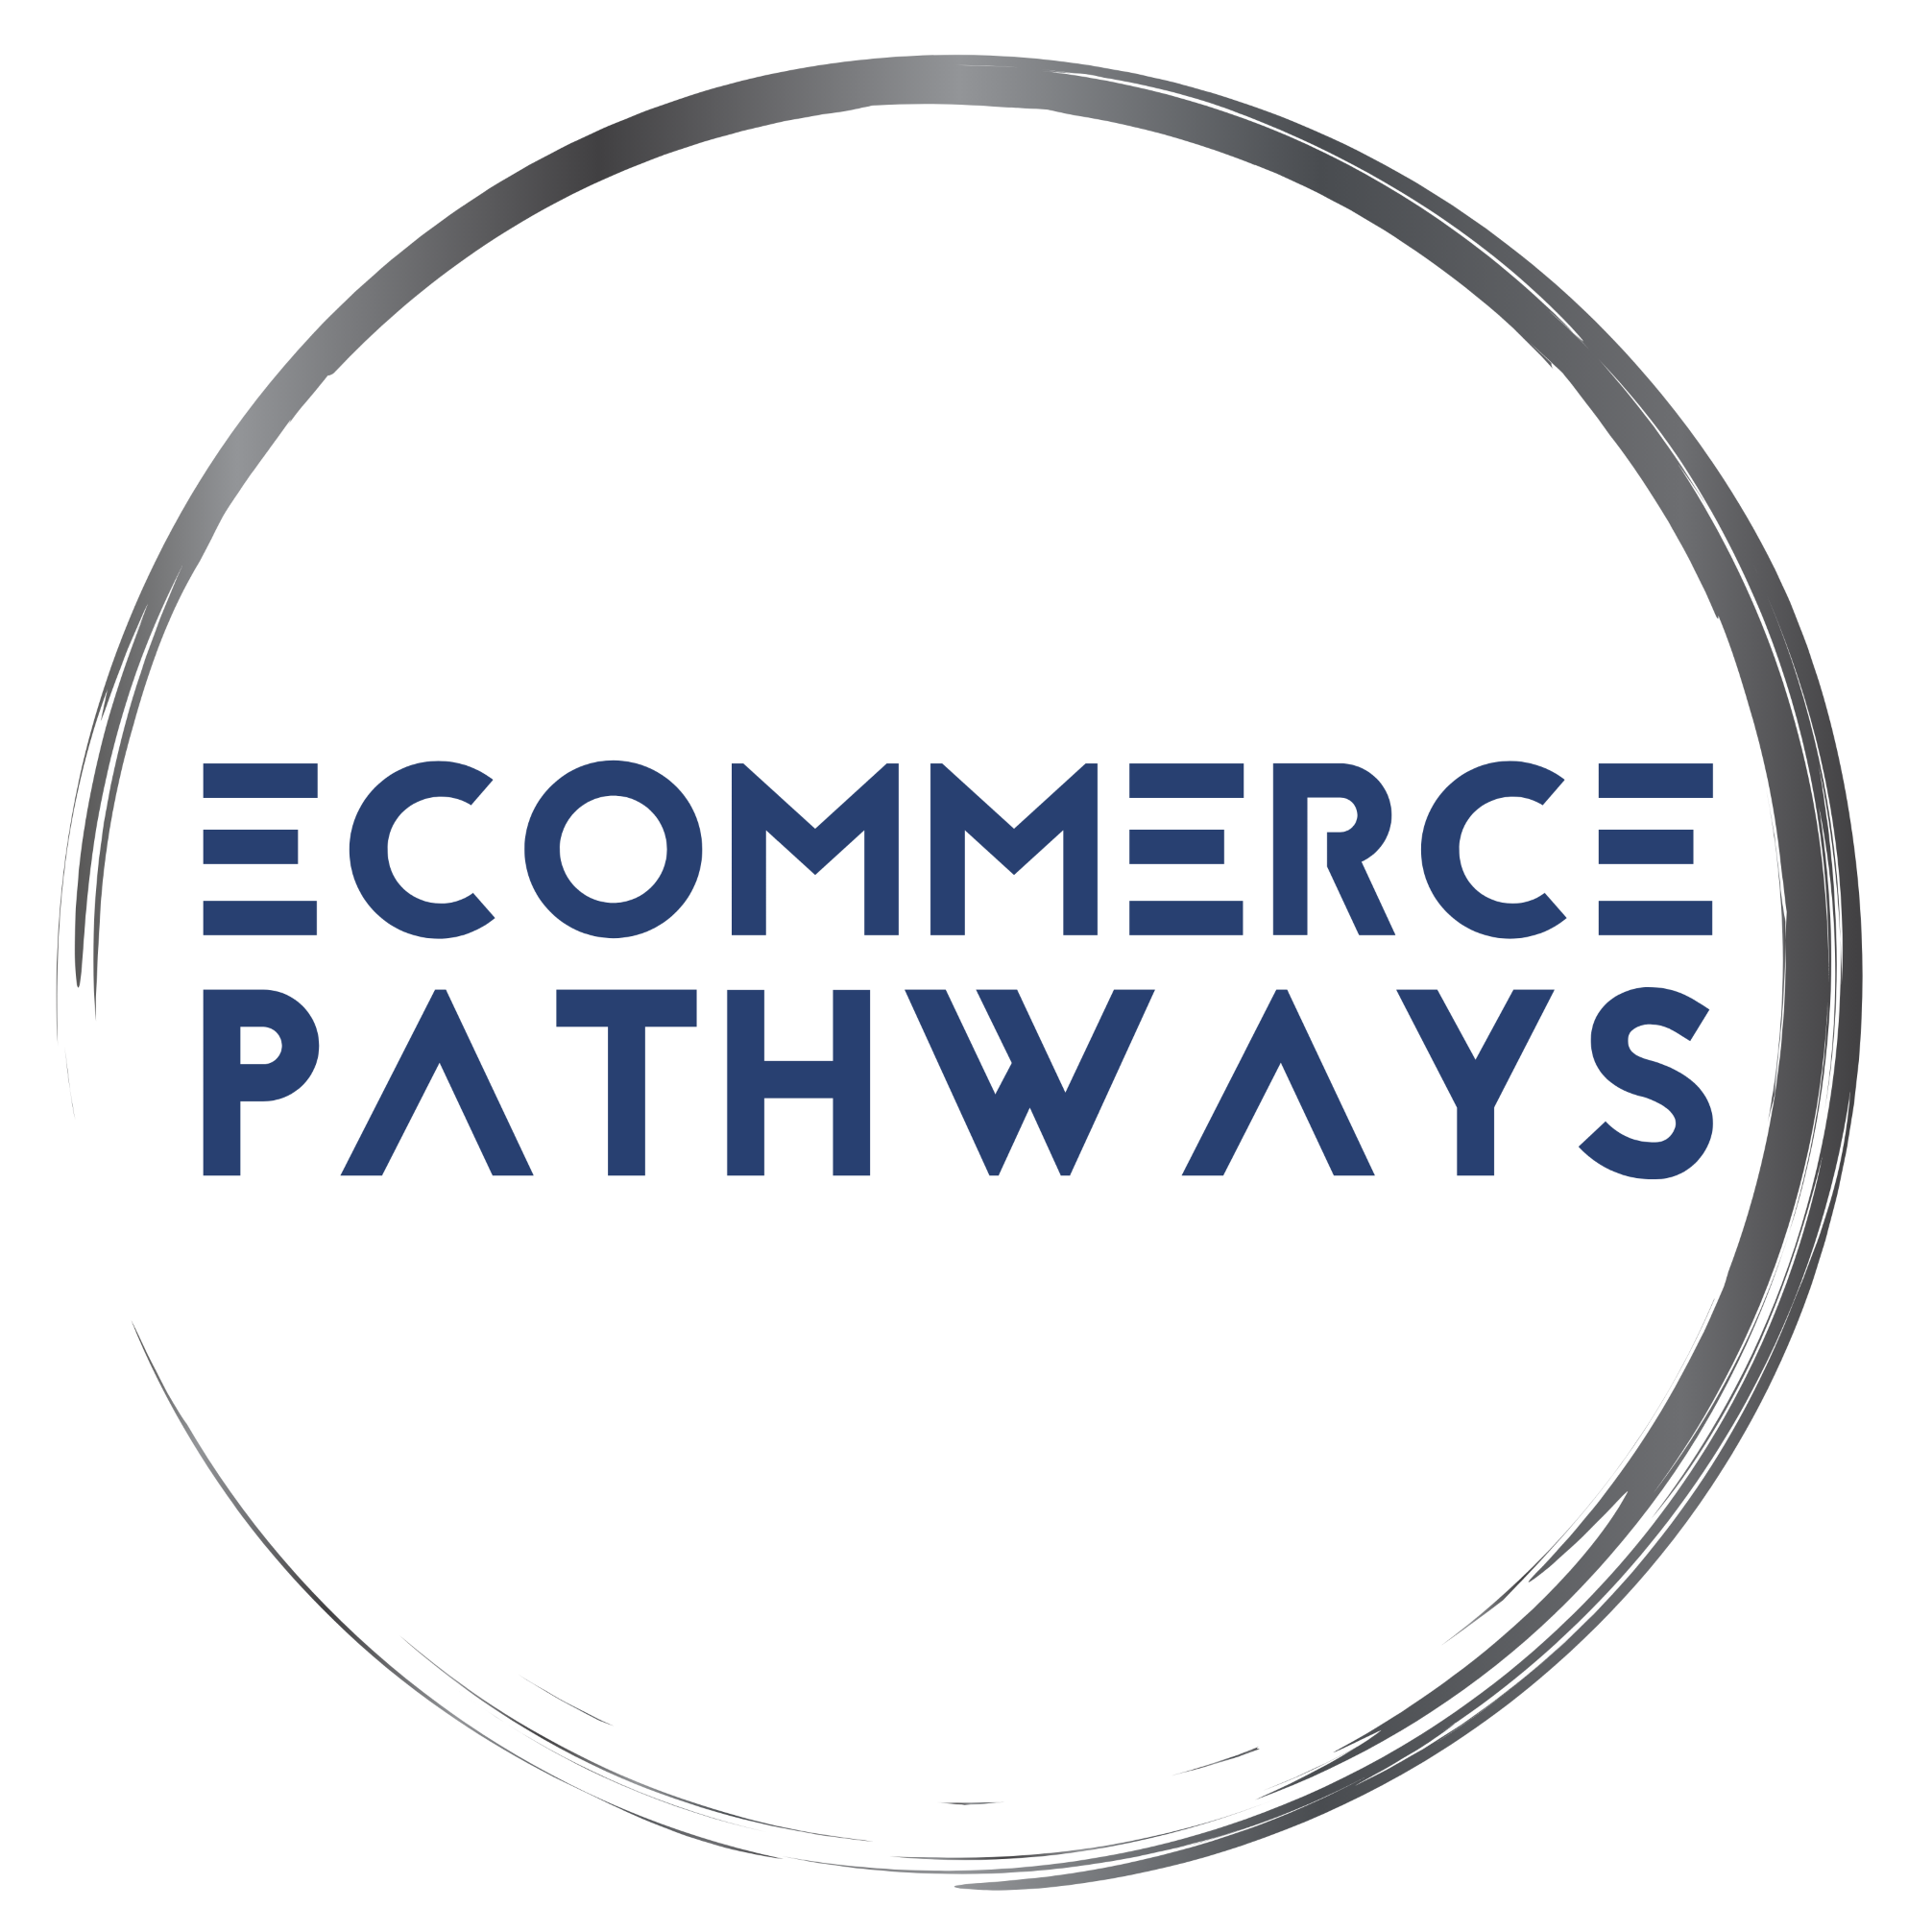 Ecommerce Pathways Inc. profile on Qualified.One